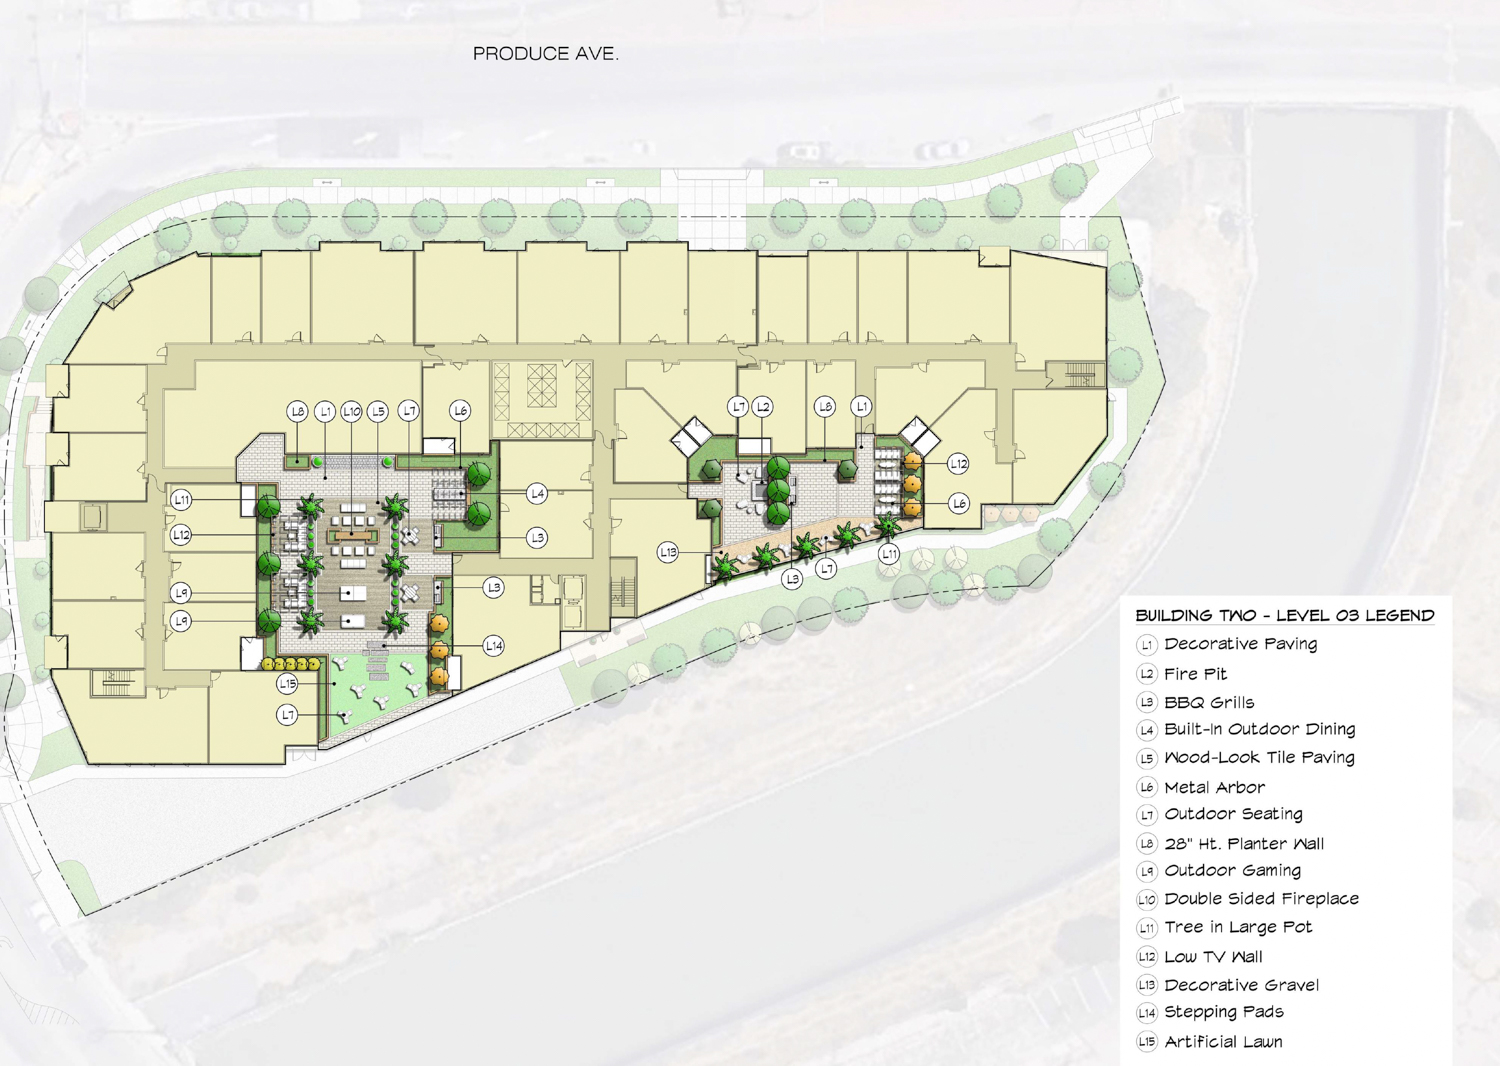 100 Produce Avenue amenity decks, rendering by TCA Architects